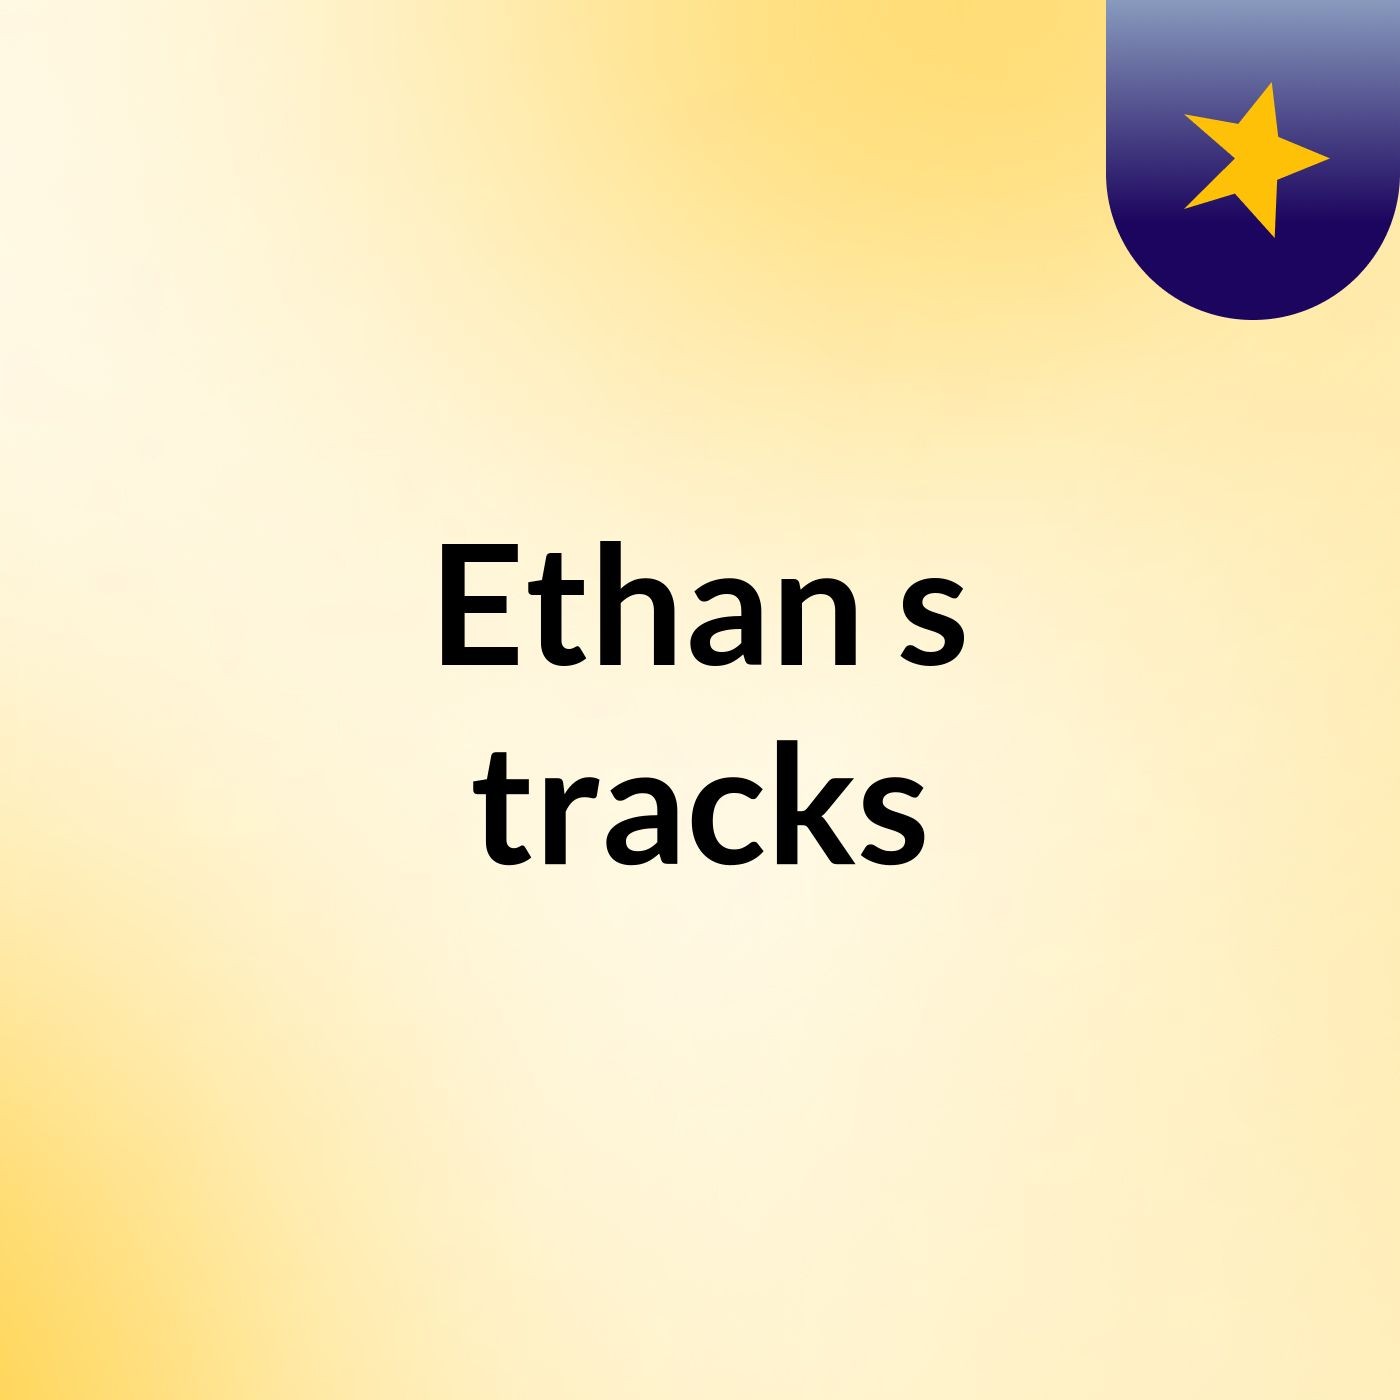 Ethan's tracks